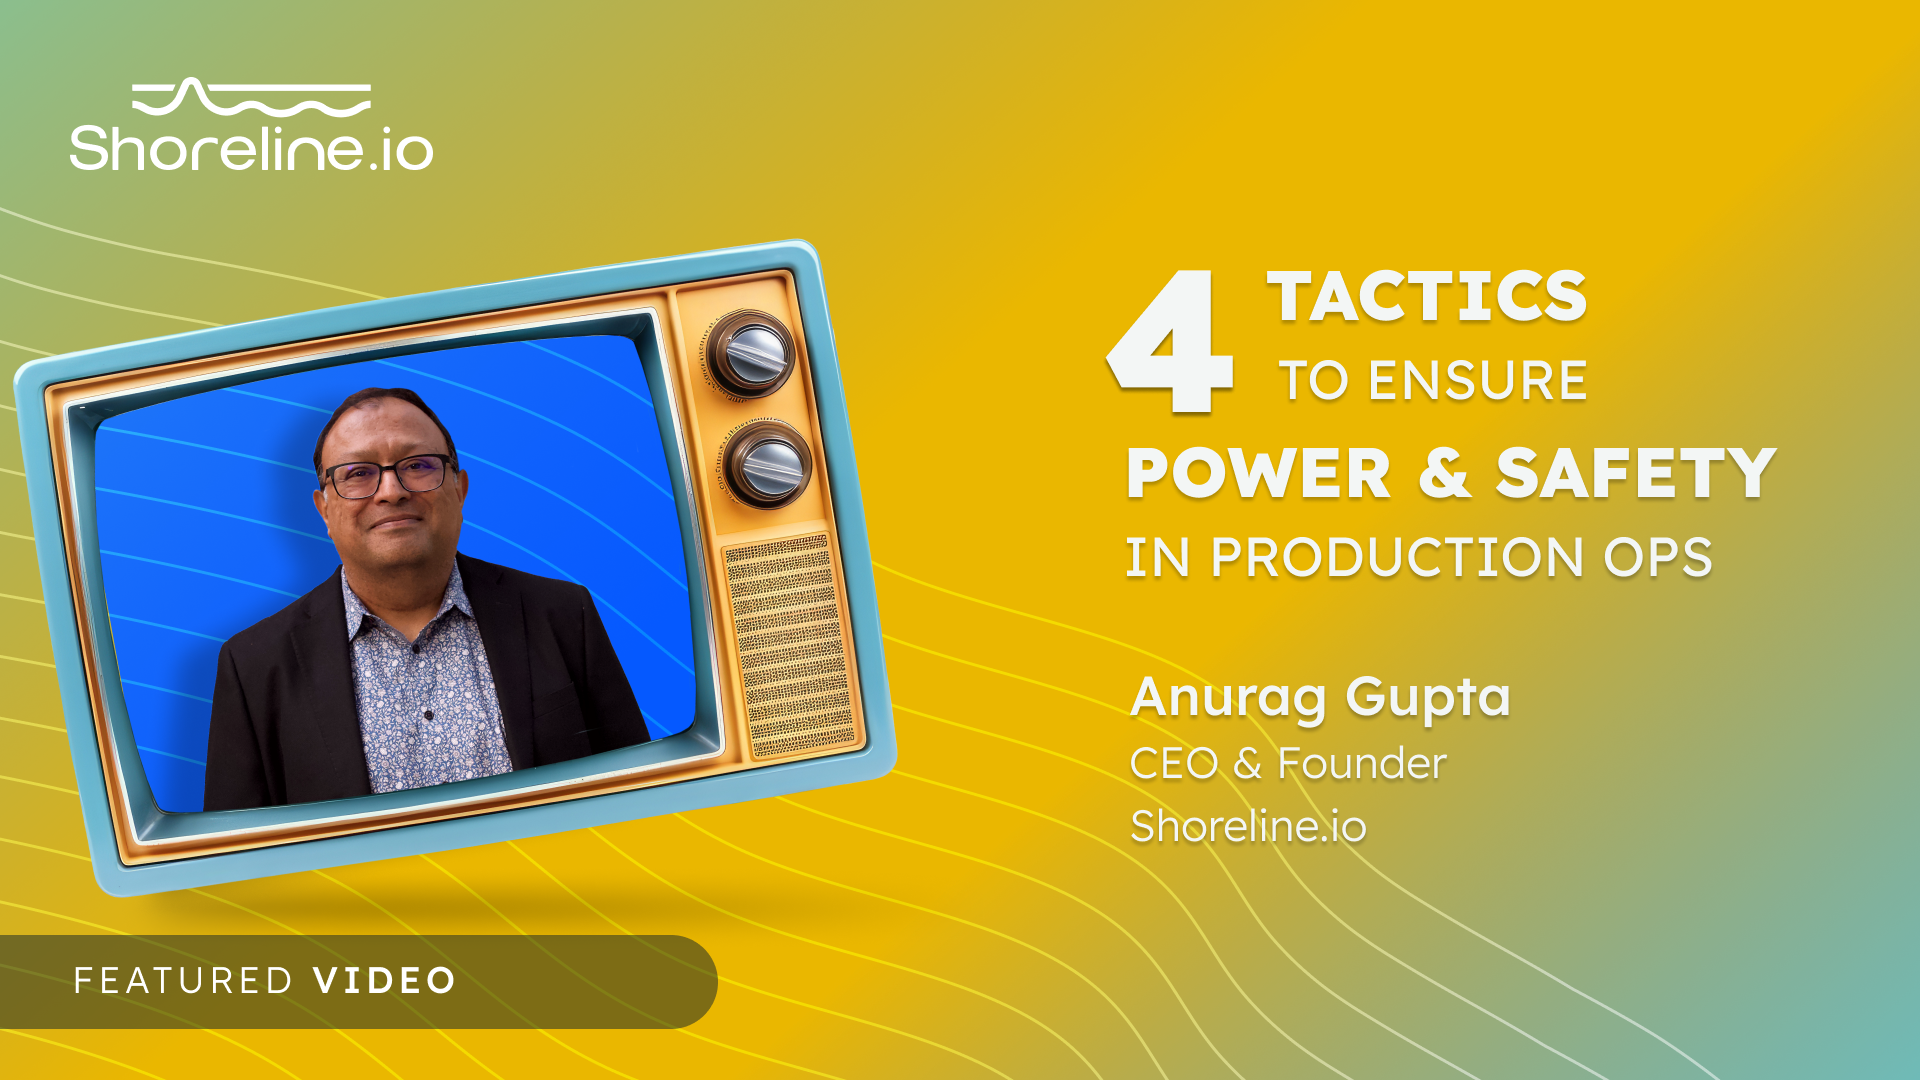 Anurag Gupta, CEO of Shoreline.io on Safer Production Operations